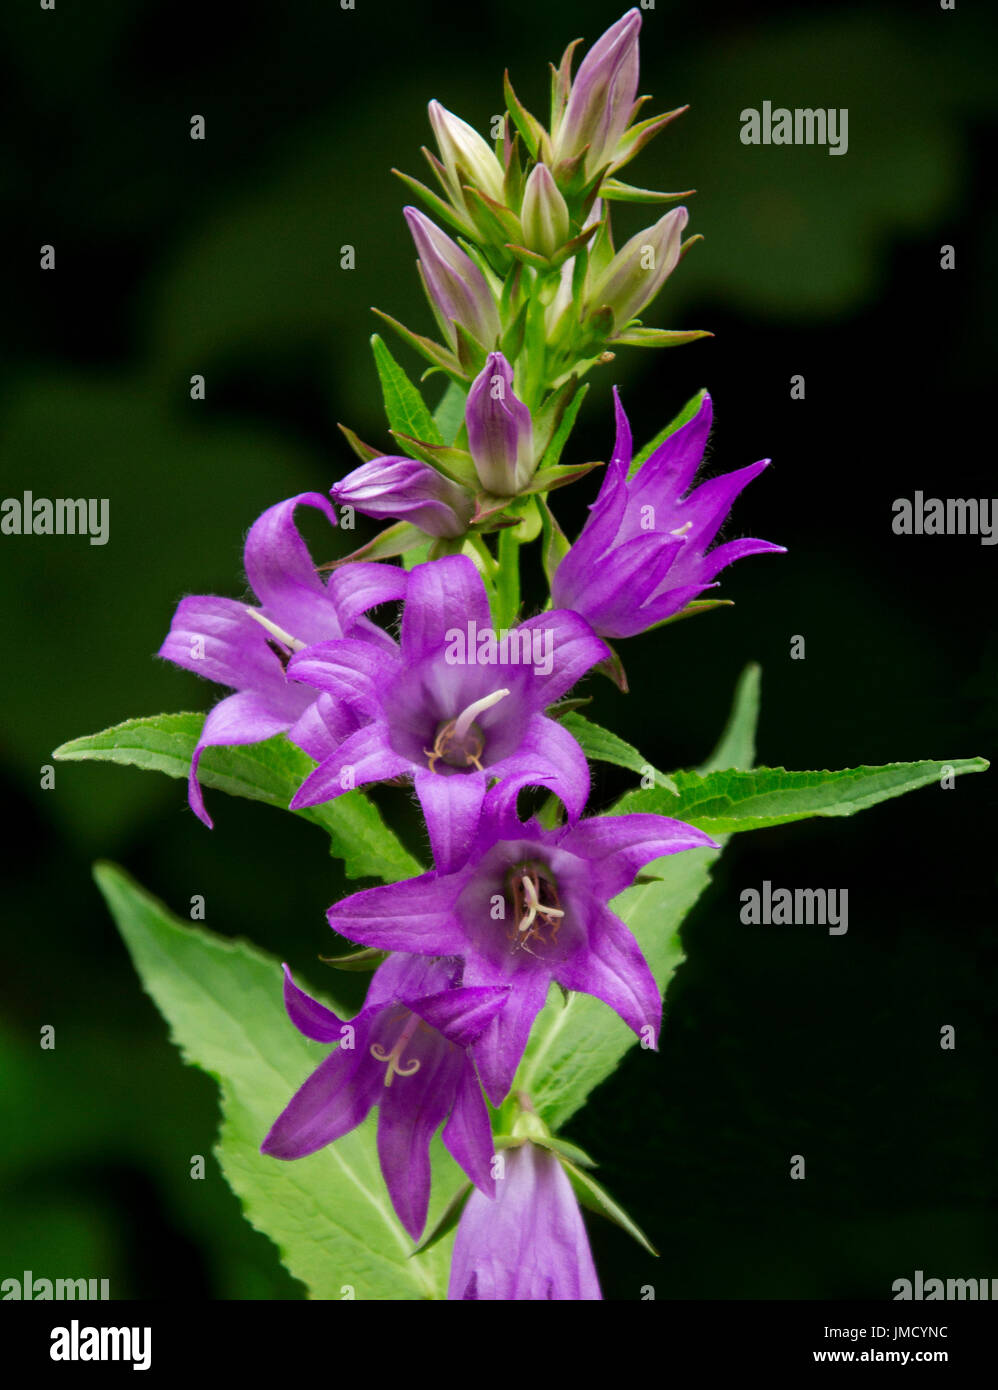 Beautiful vivid purple flowers and emerald  foliage of Campanula latifolia, bellflower, British wildflowers on black background Stock Photo